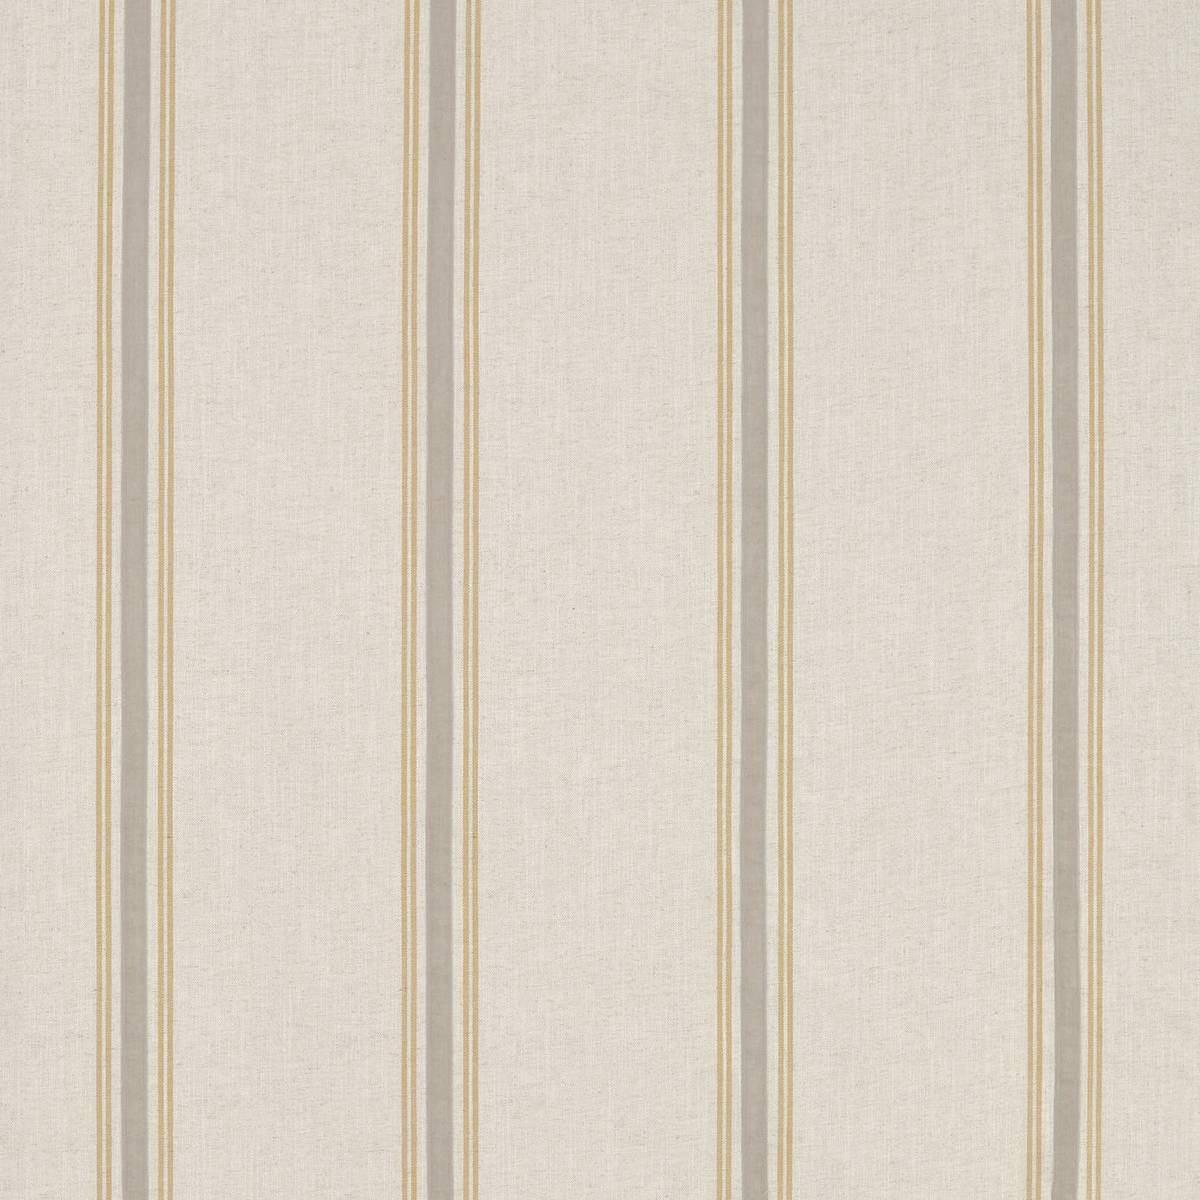 Hockley Stripe Dijon Fabric by Sanderson